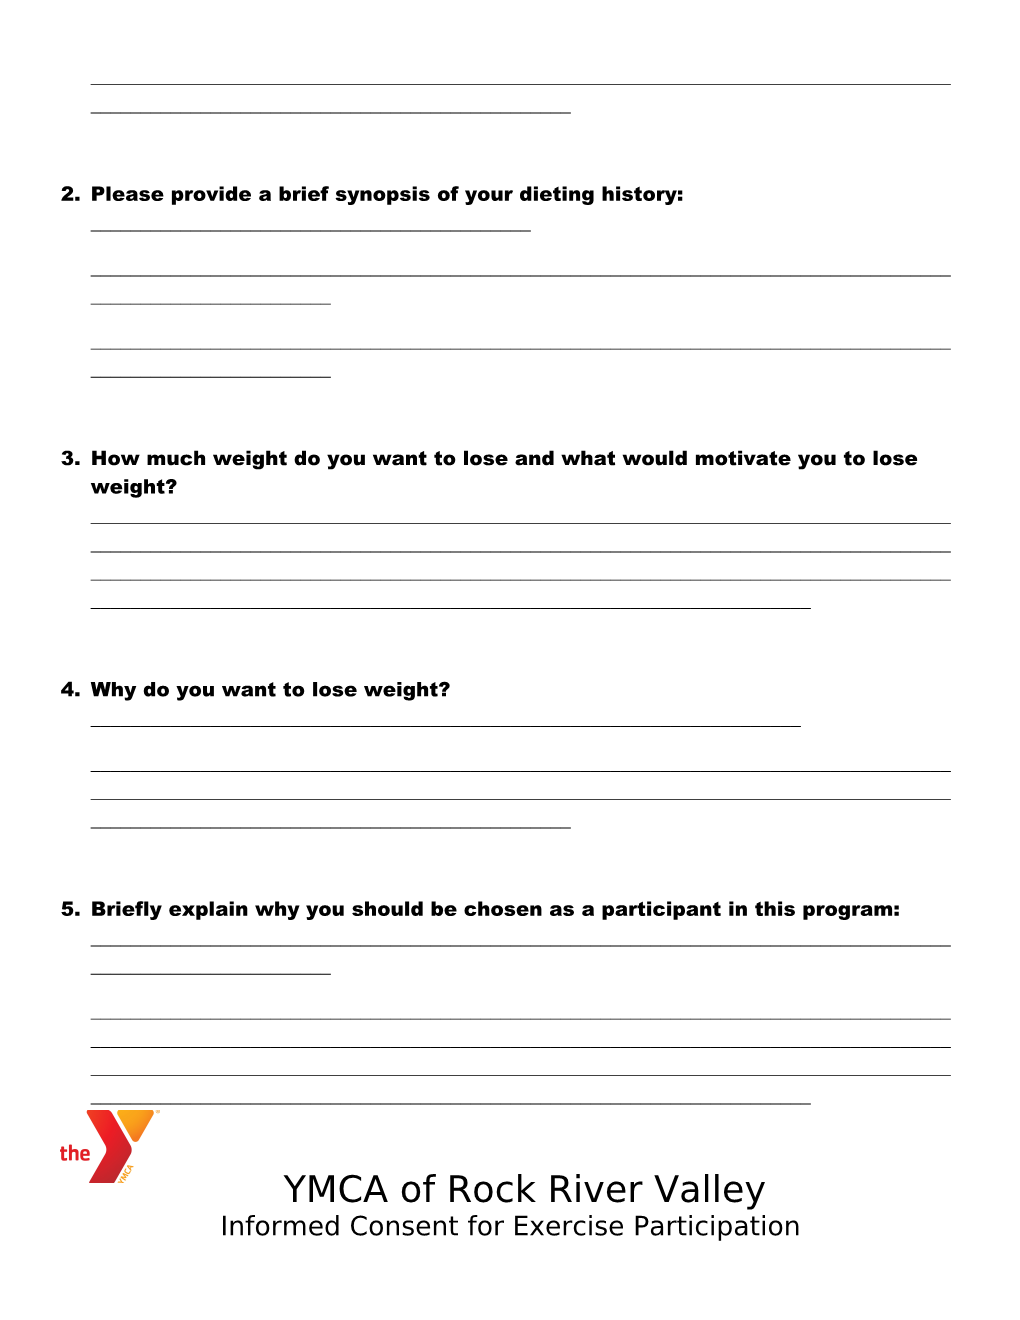 YMCA Community Health Challenge Application